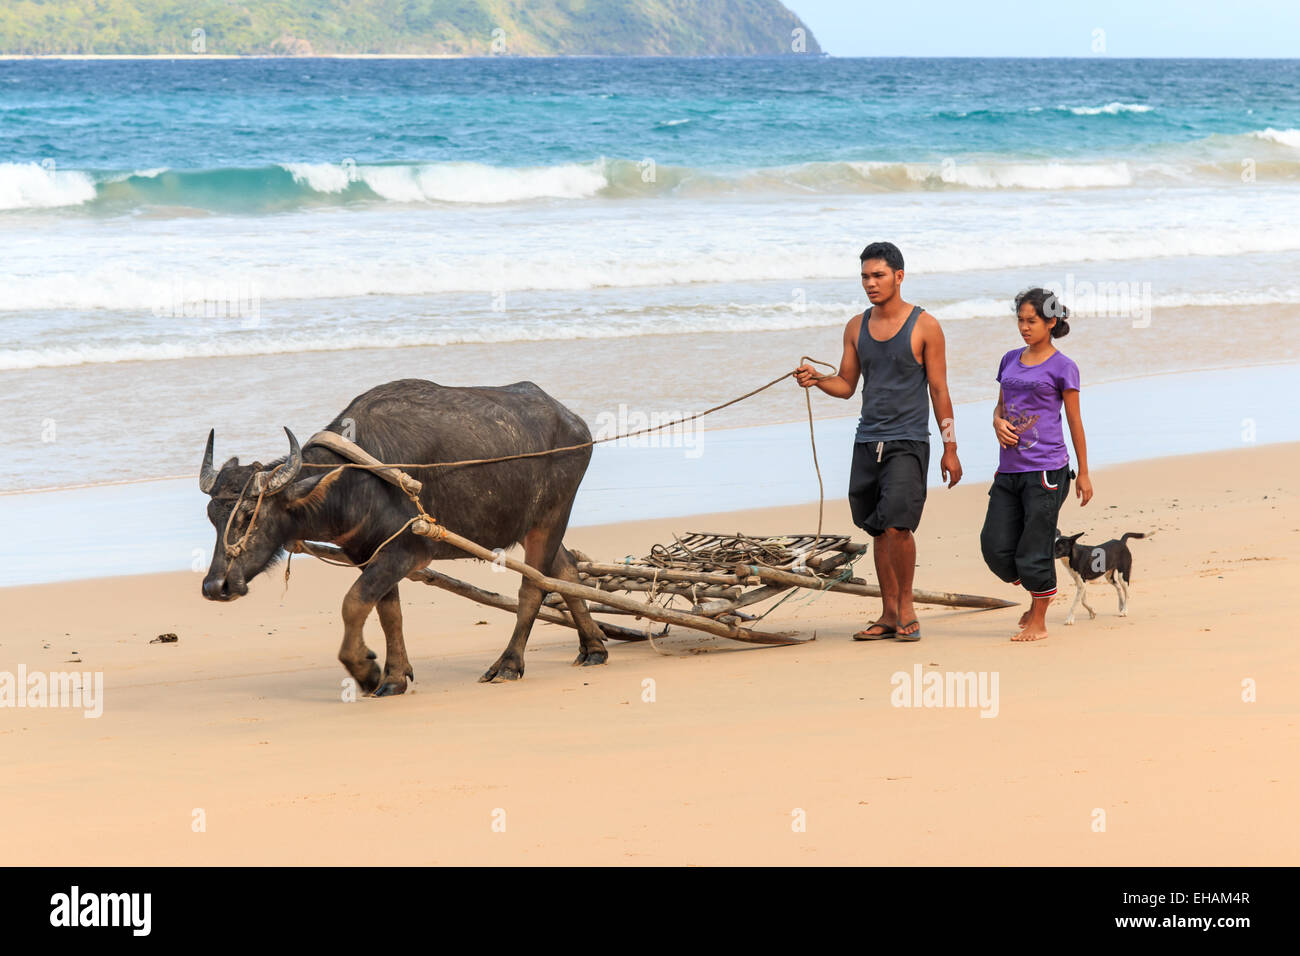 Nacpan, Philippines - January 18,2015: Farmers of Nacpan walking on the beach with a Carabao, the water buffalo Stock Photo